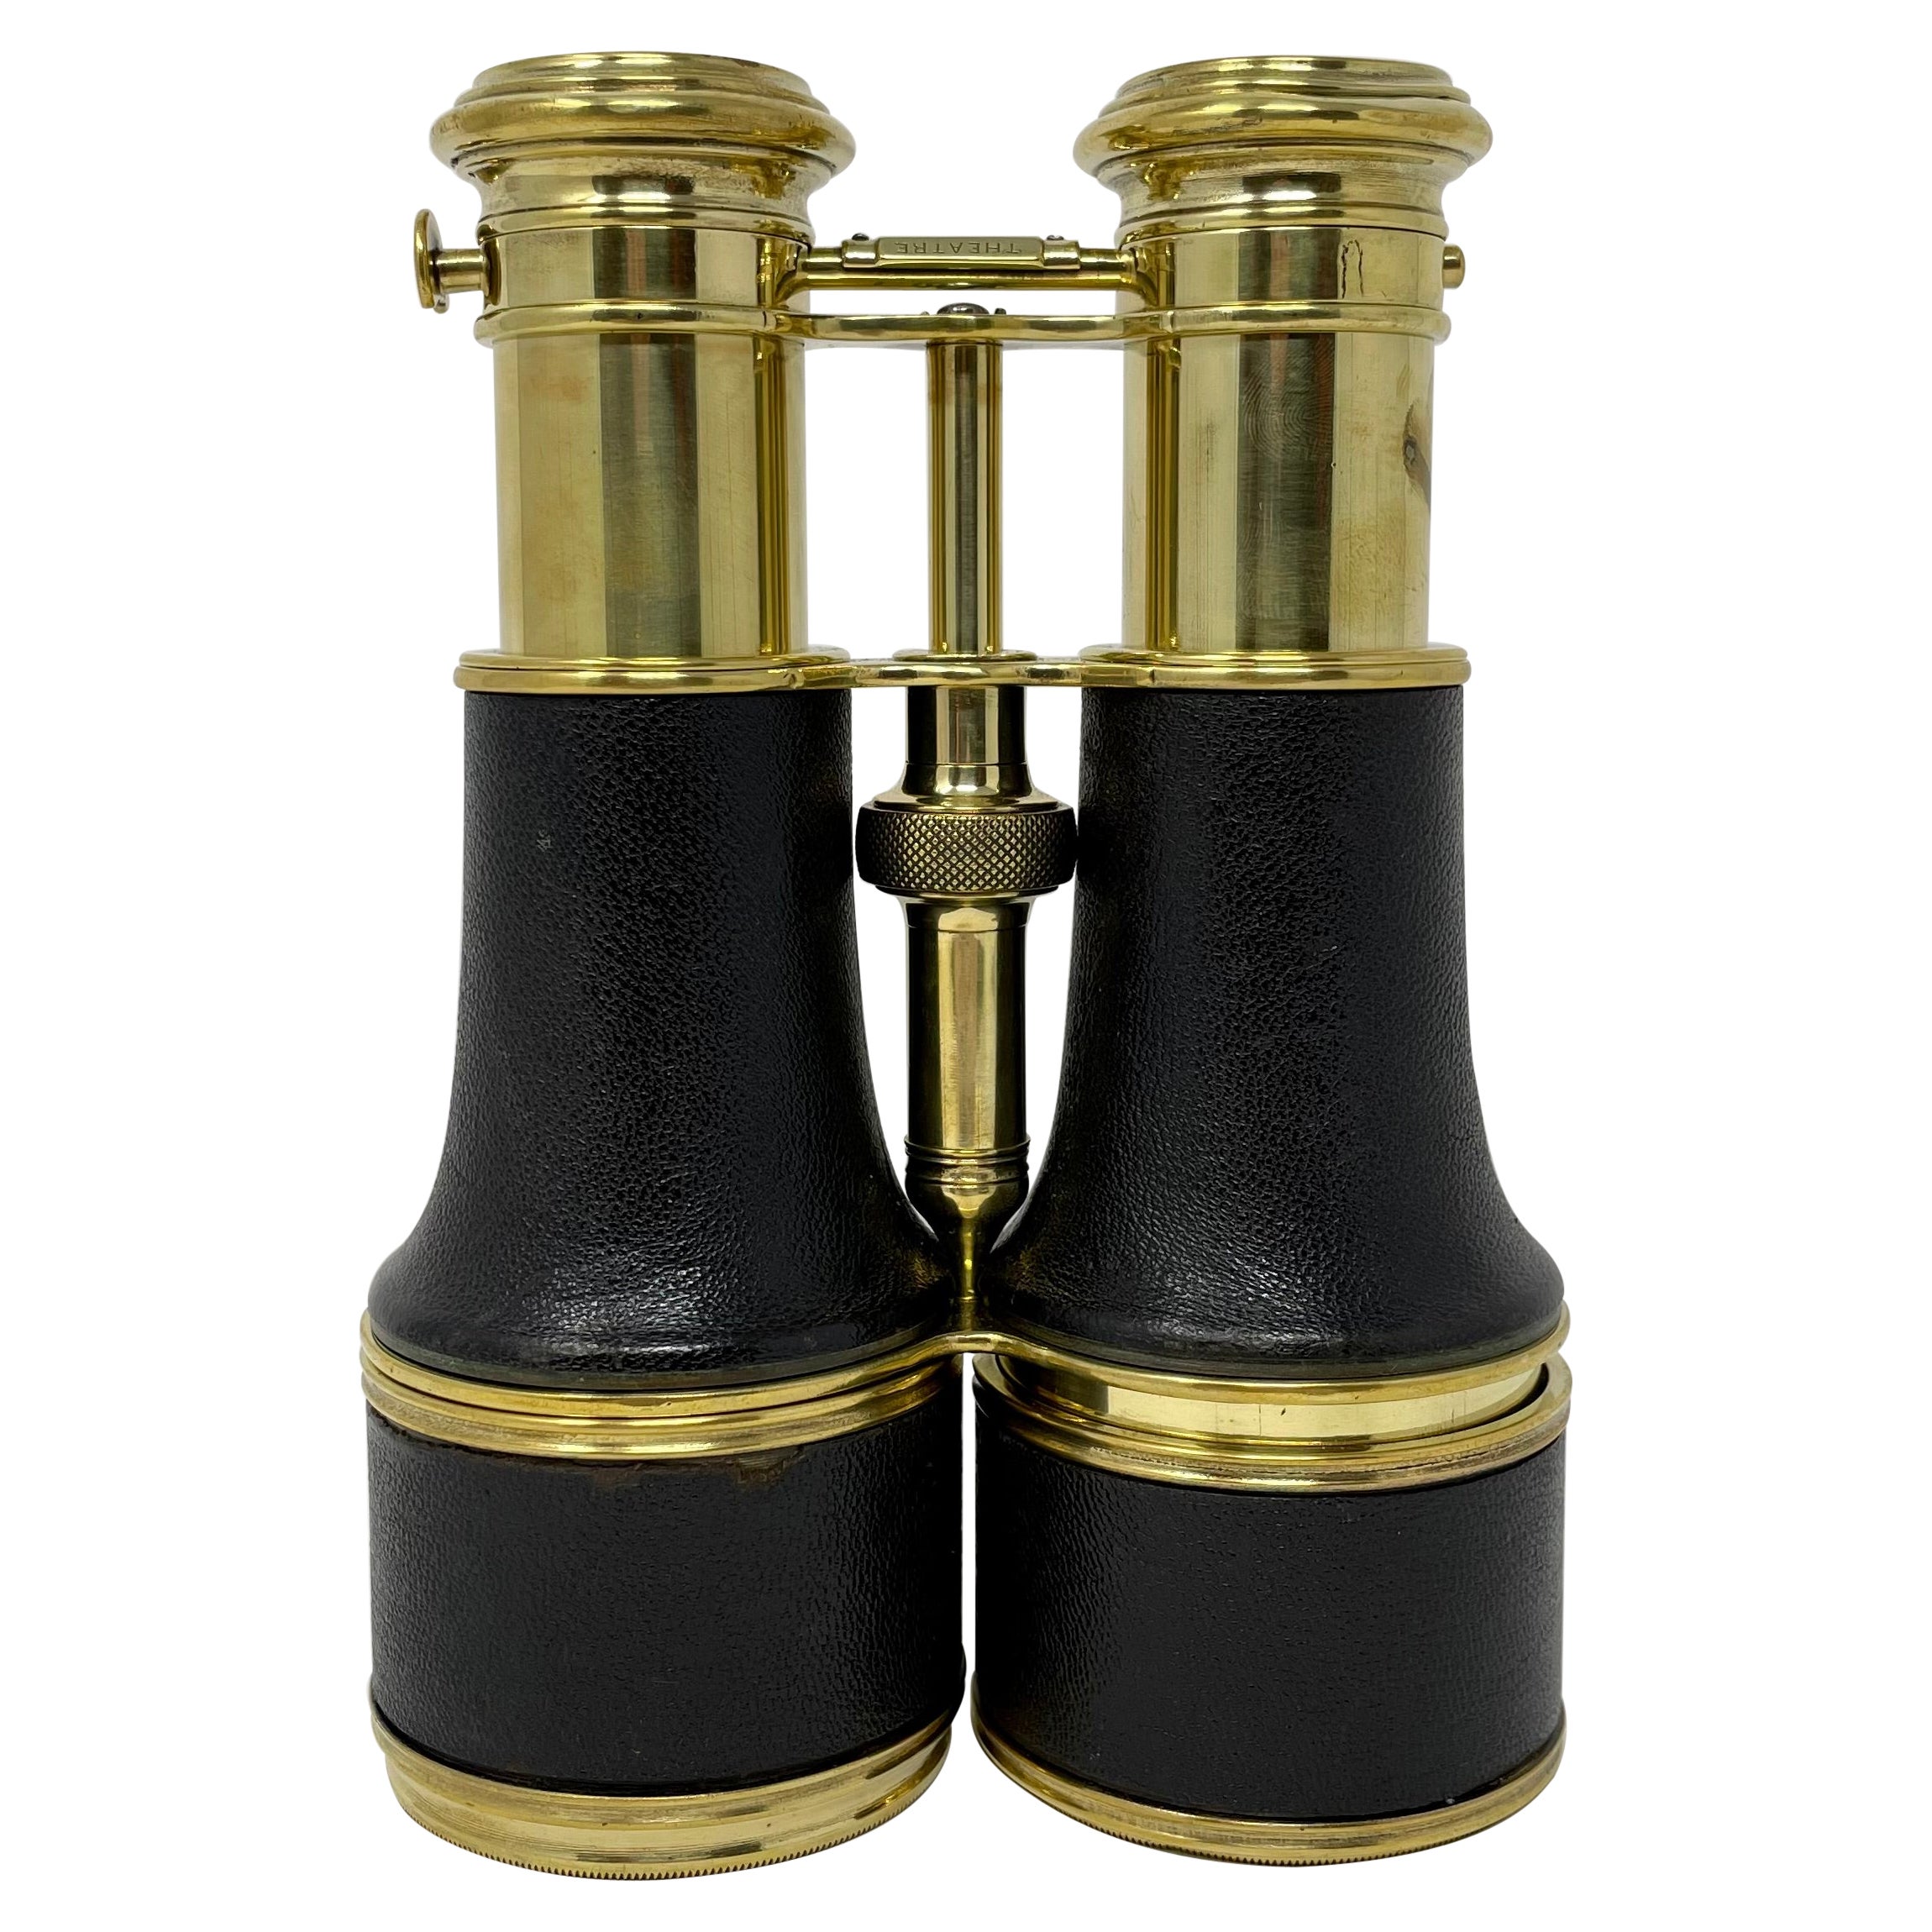 Pair Antique British Leather and Brass Marine Field Binoculars, Circa 1900-1910.